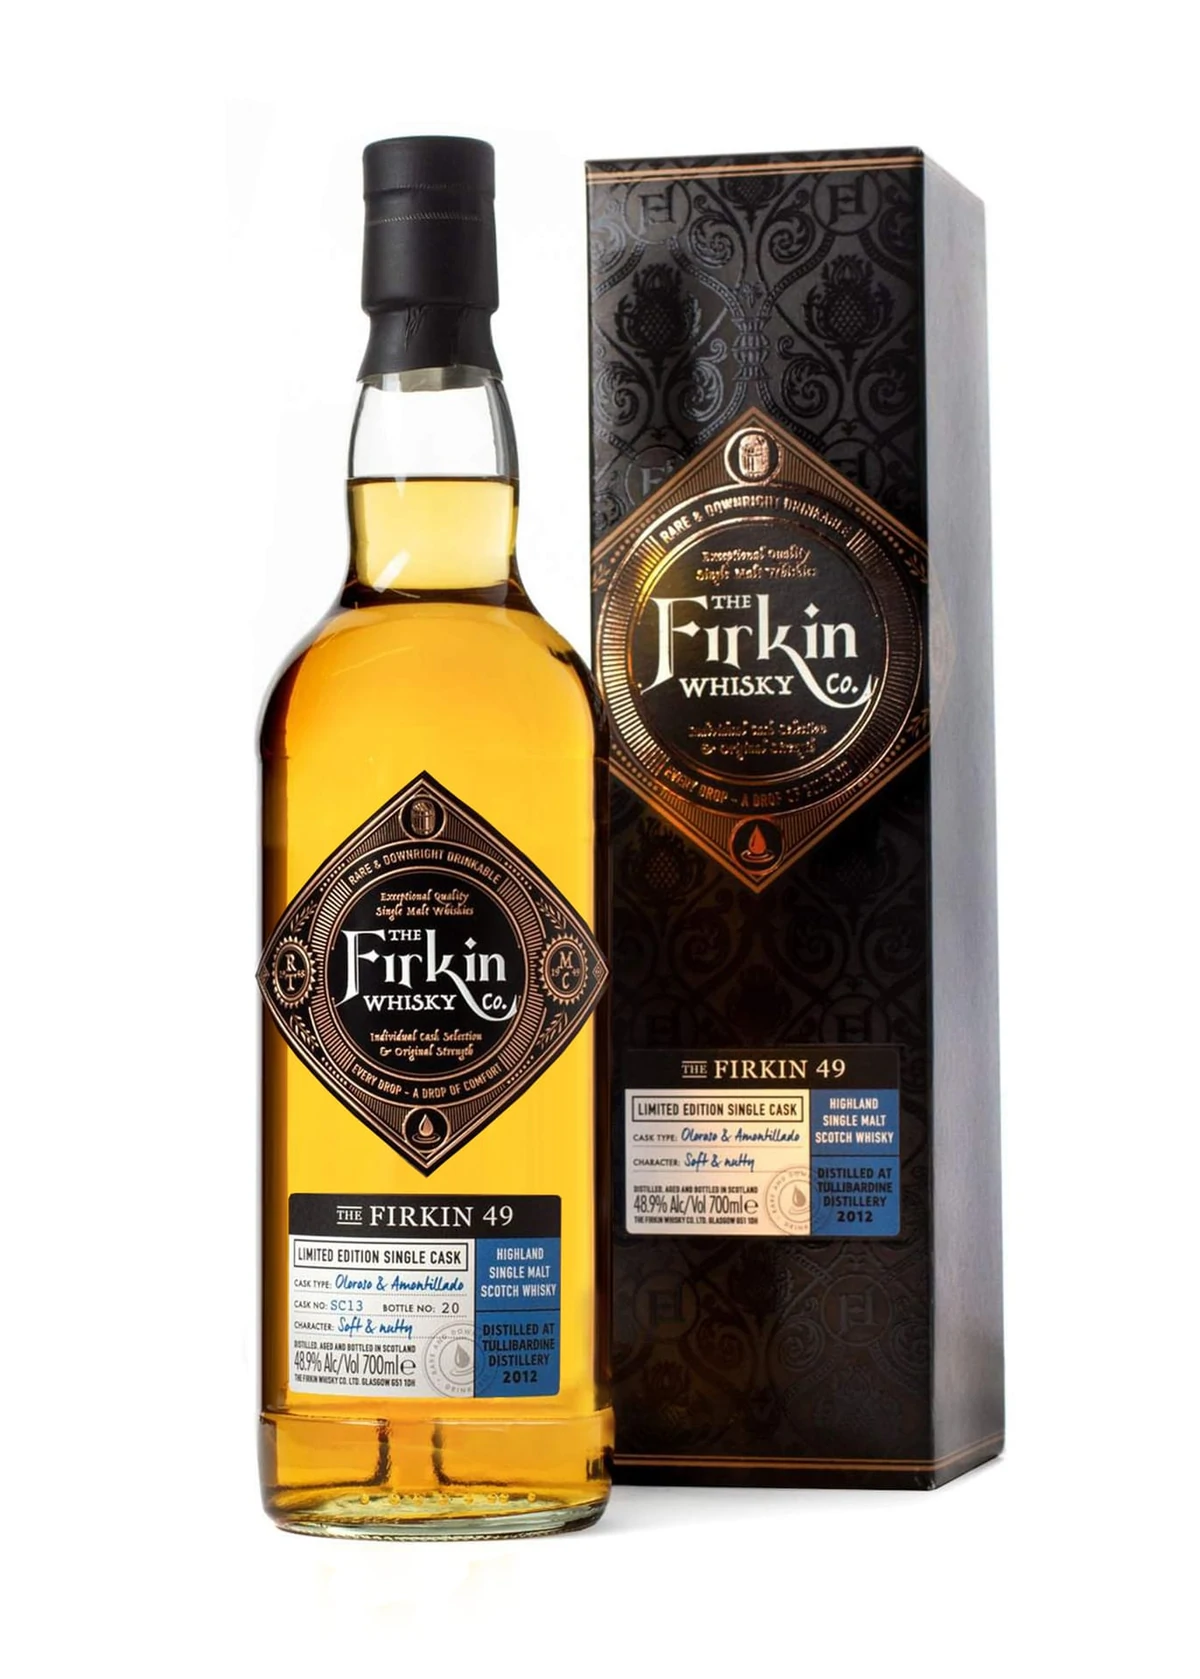 Firkin-49-Tullibardin-Whisky-with-Amontillado-Oloroso-Bottle-Box-1372x1920v2_1200x